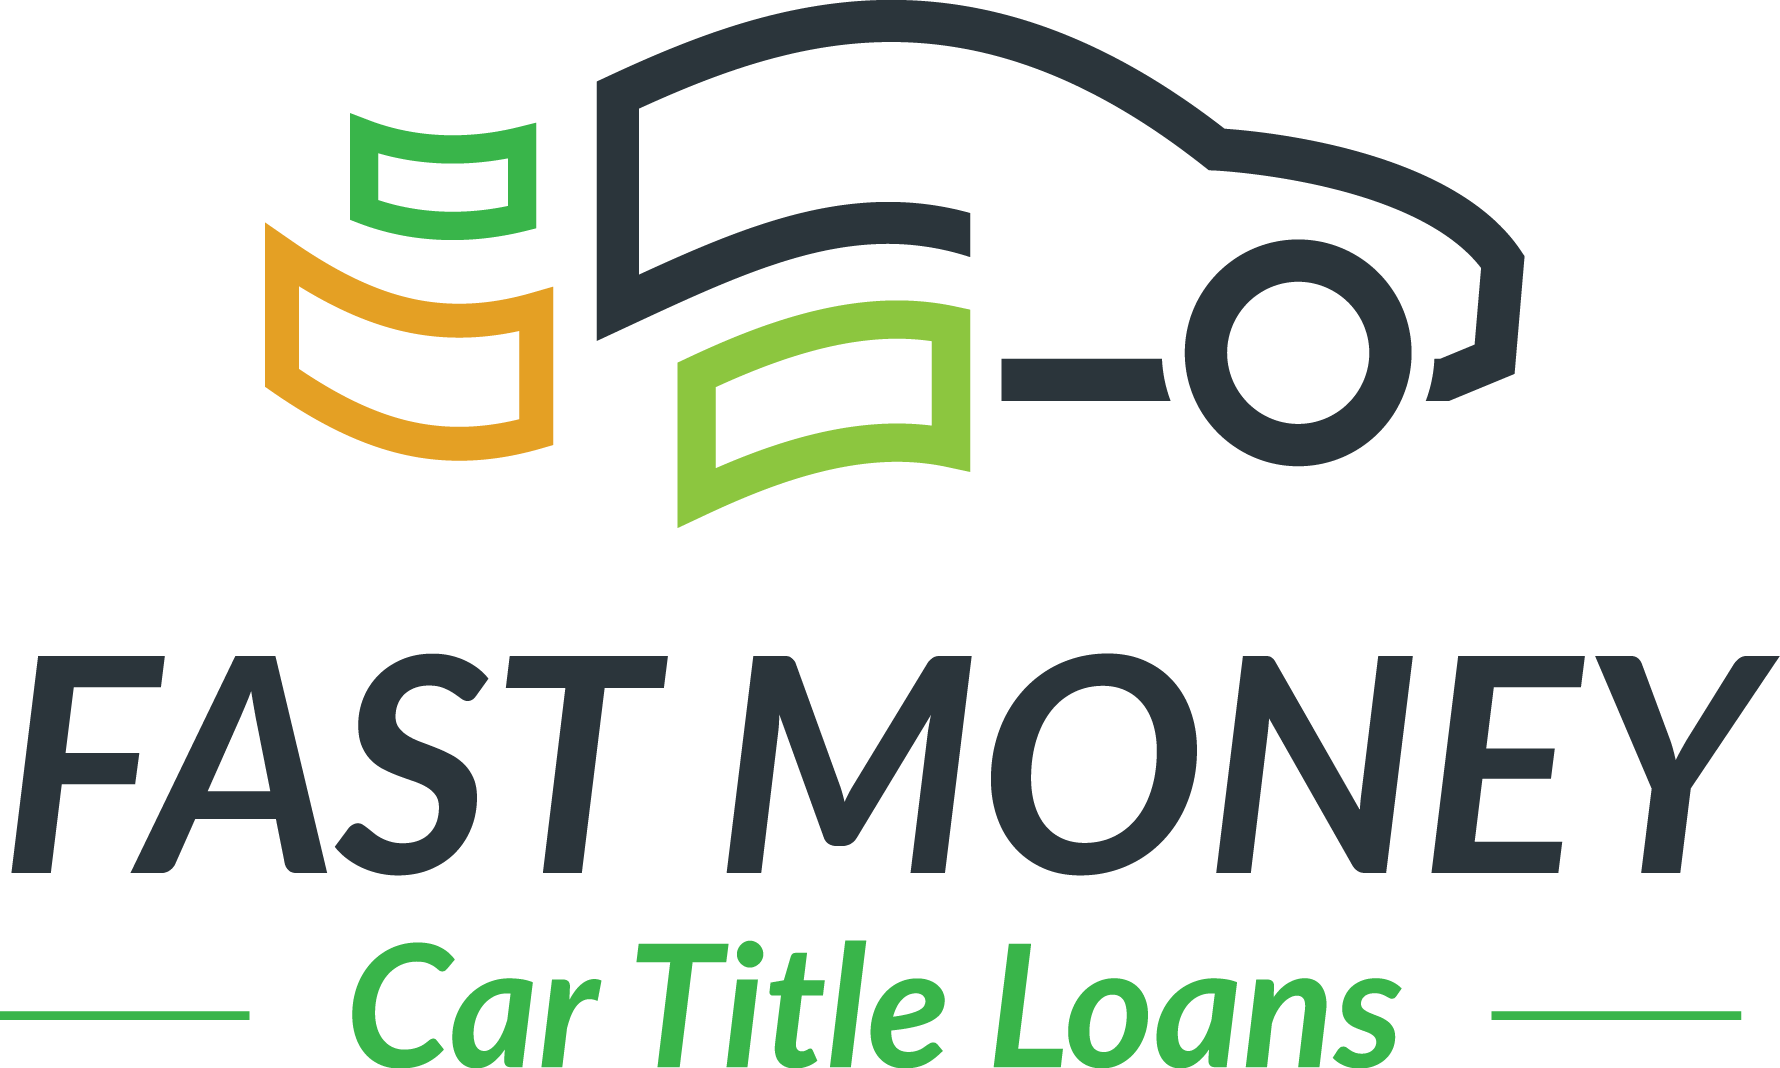 Family Car Title Loans's Logo